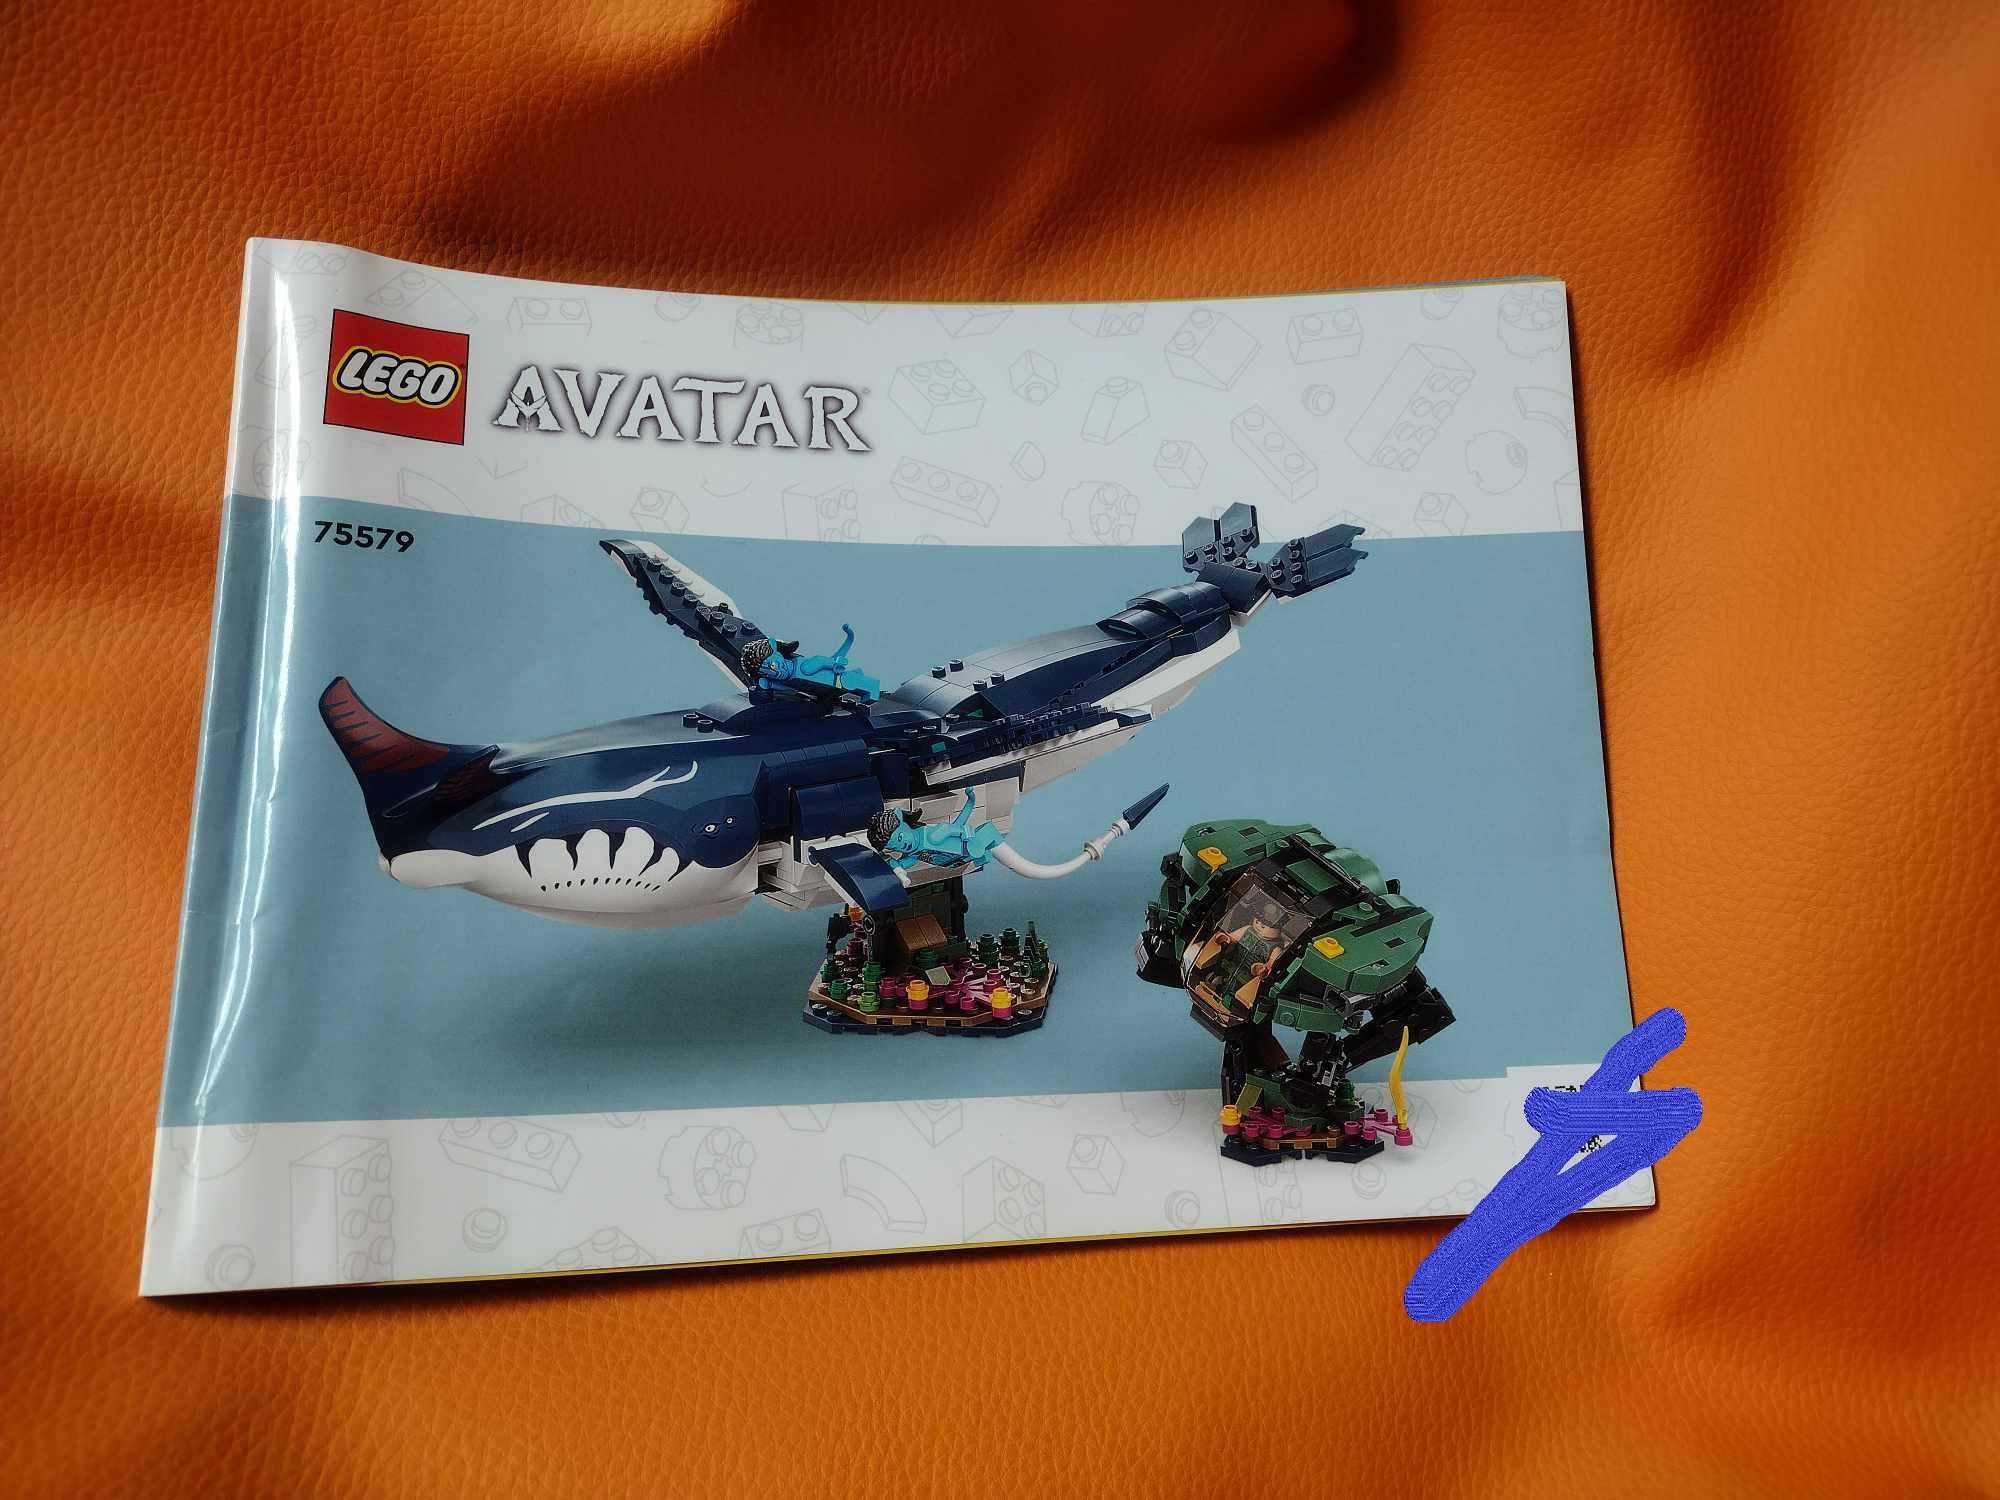 LEGO Avatar 75579 - instrukcja